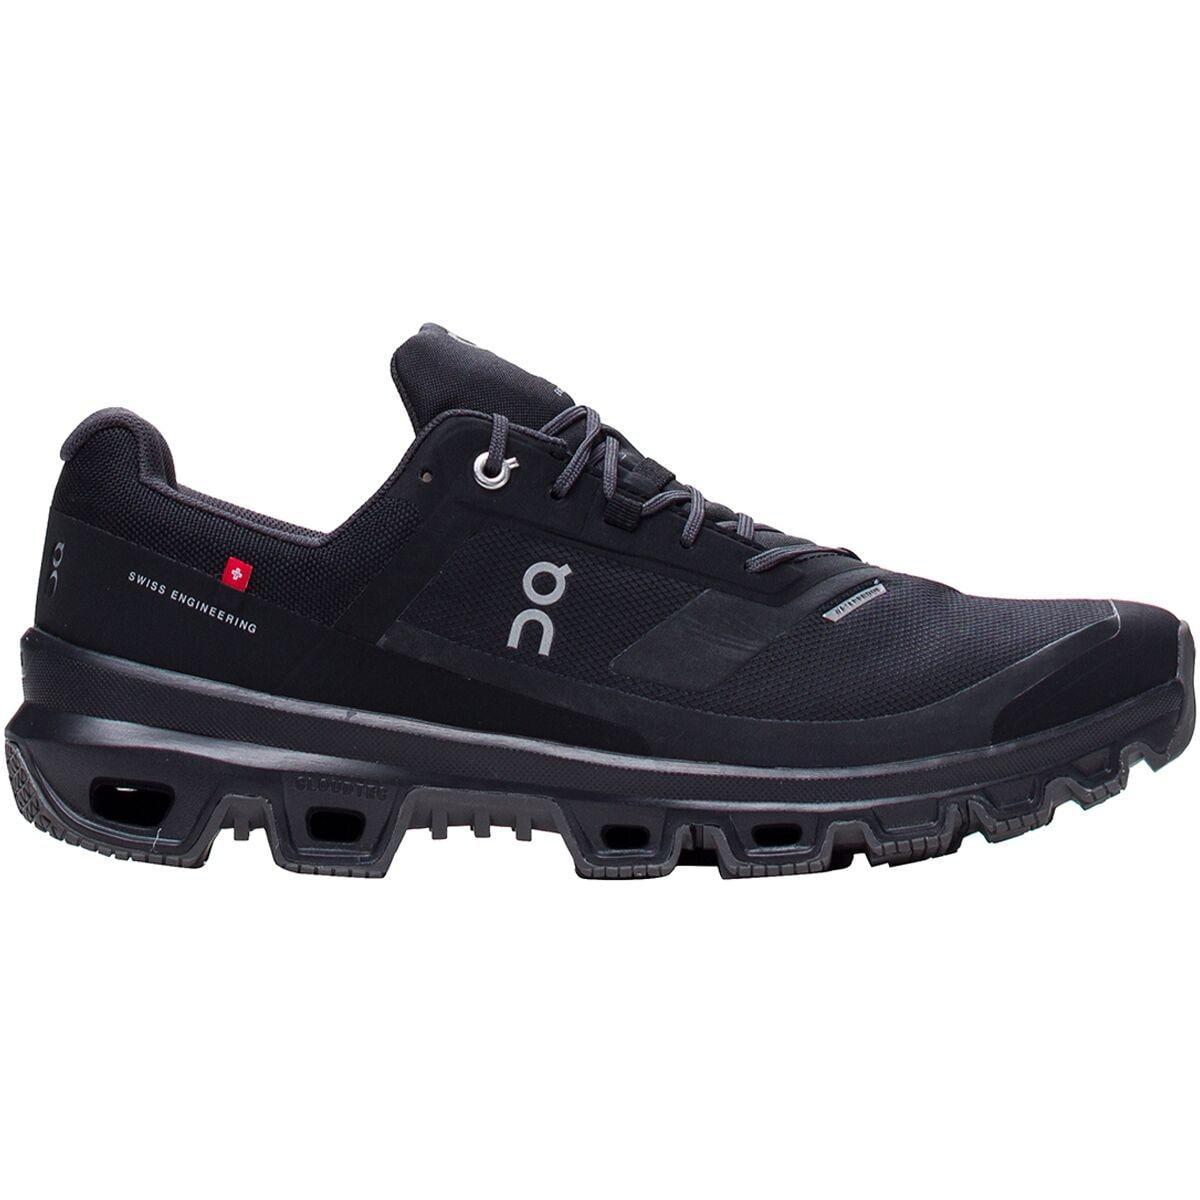 Cloudventure Waterproof Trail Run Shoe - Men's Product Image